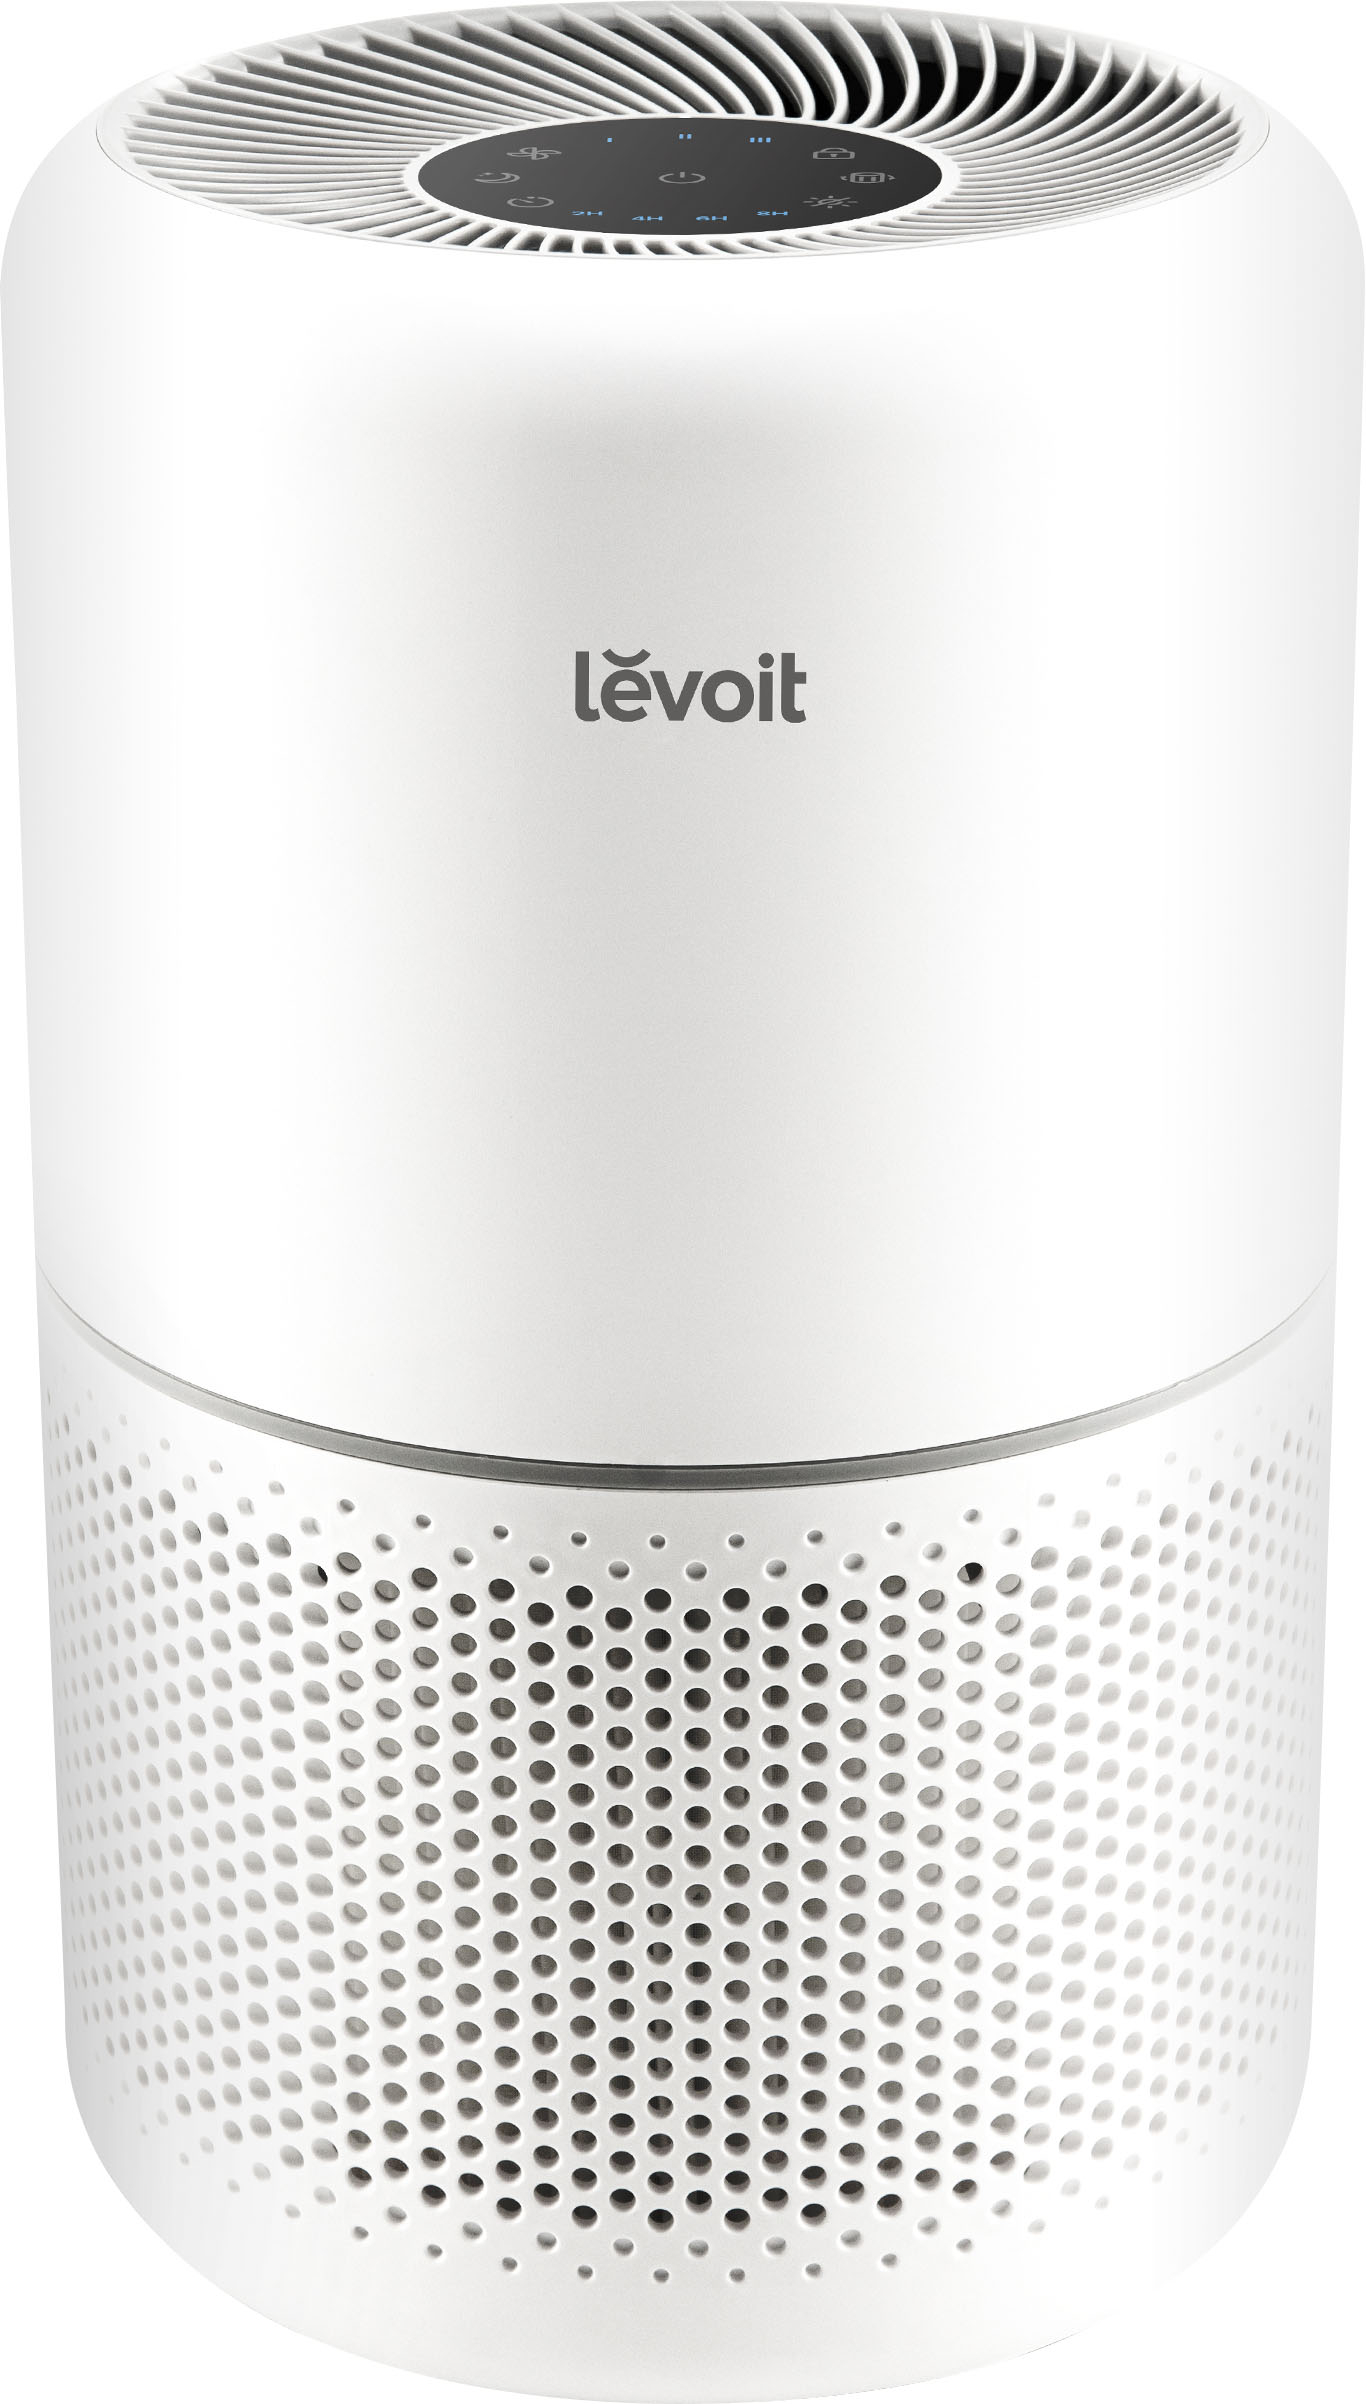 Sound Test: Noise Level of the Levoit Core 300 